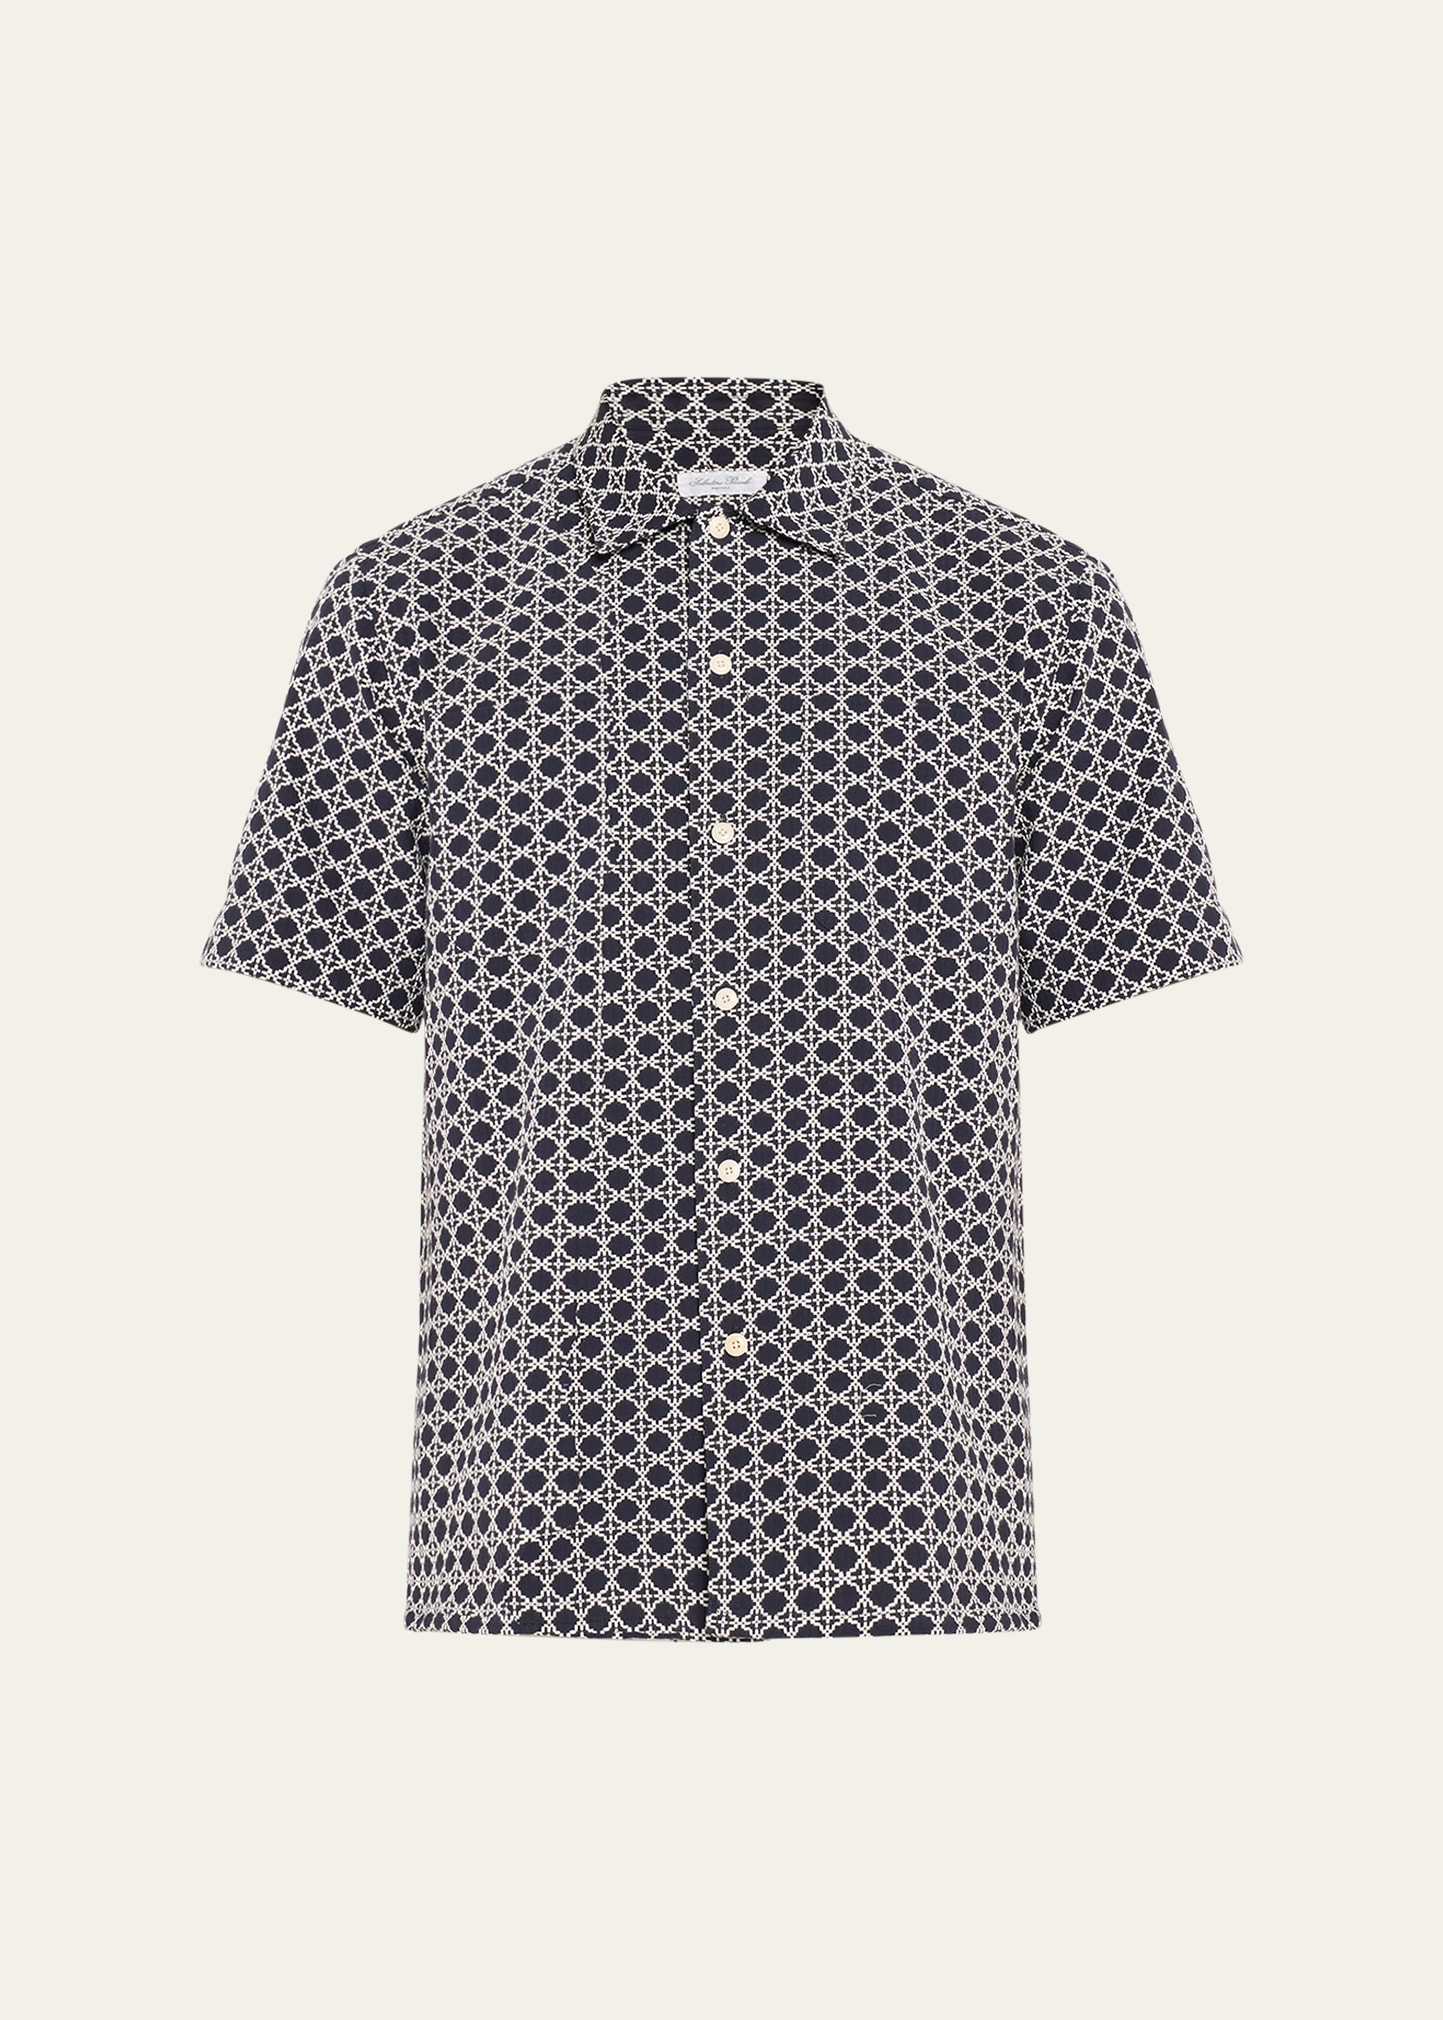 Men's Cotton Embroidered Short-Sleeve Shirt